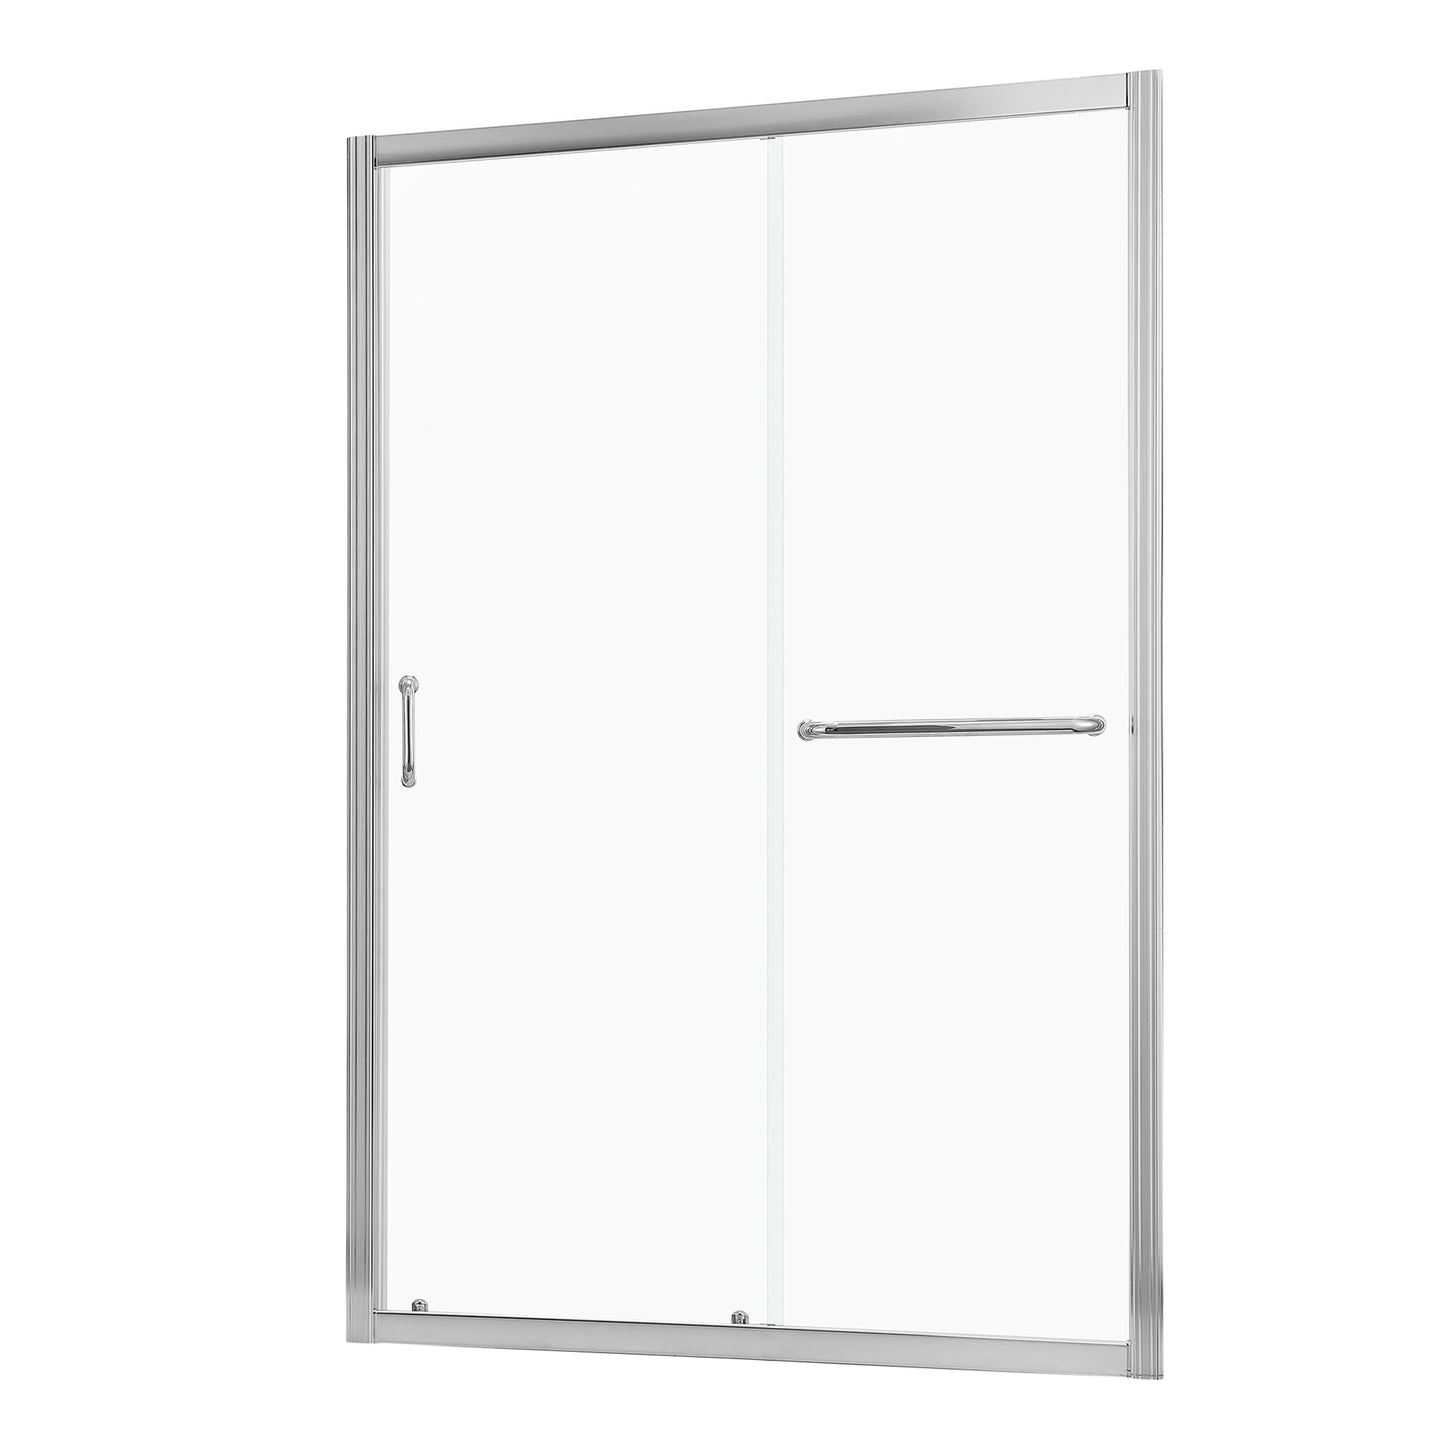 Shower Door 48" W x 72"H Single Sliding Bypass Shower Enclosure,Chrome